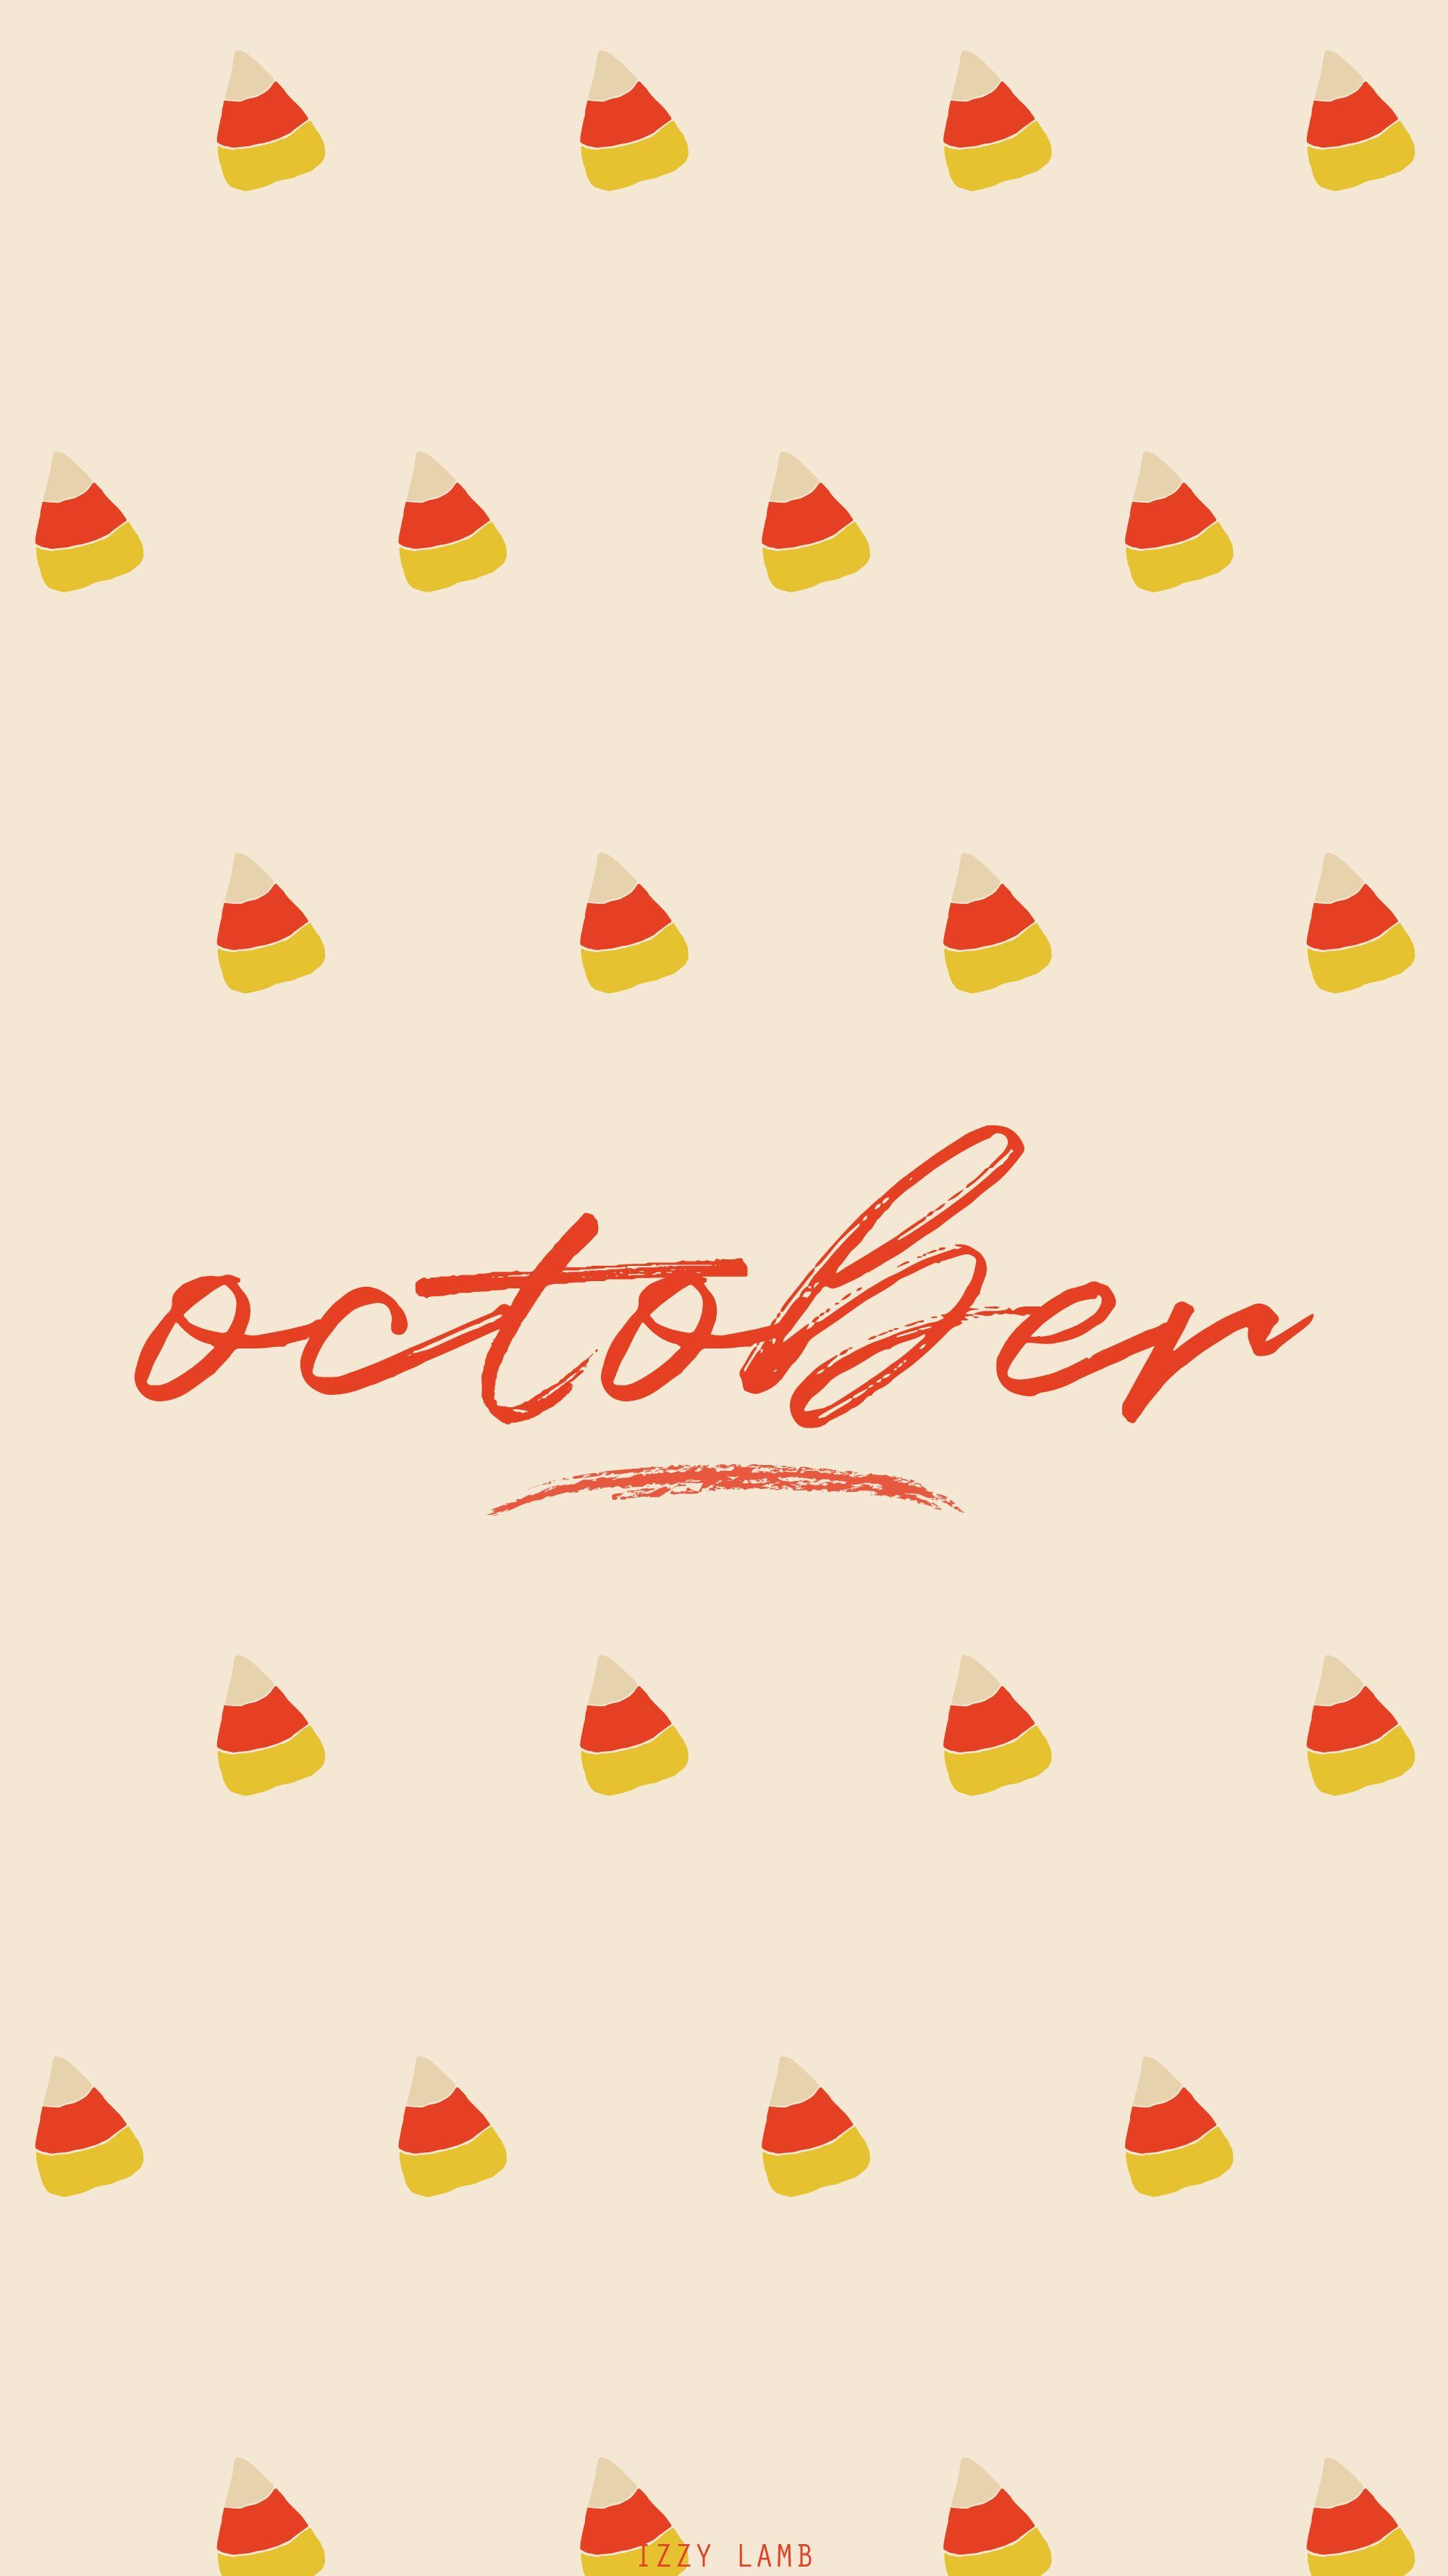 October Candy Corn. October wallpaper, iPhone wallpaper fall, iPhone wallpaper october